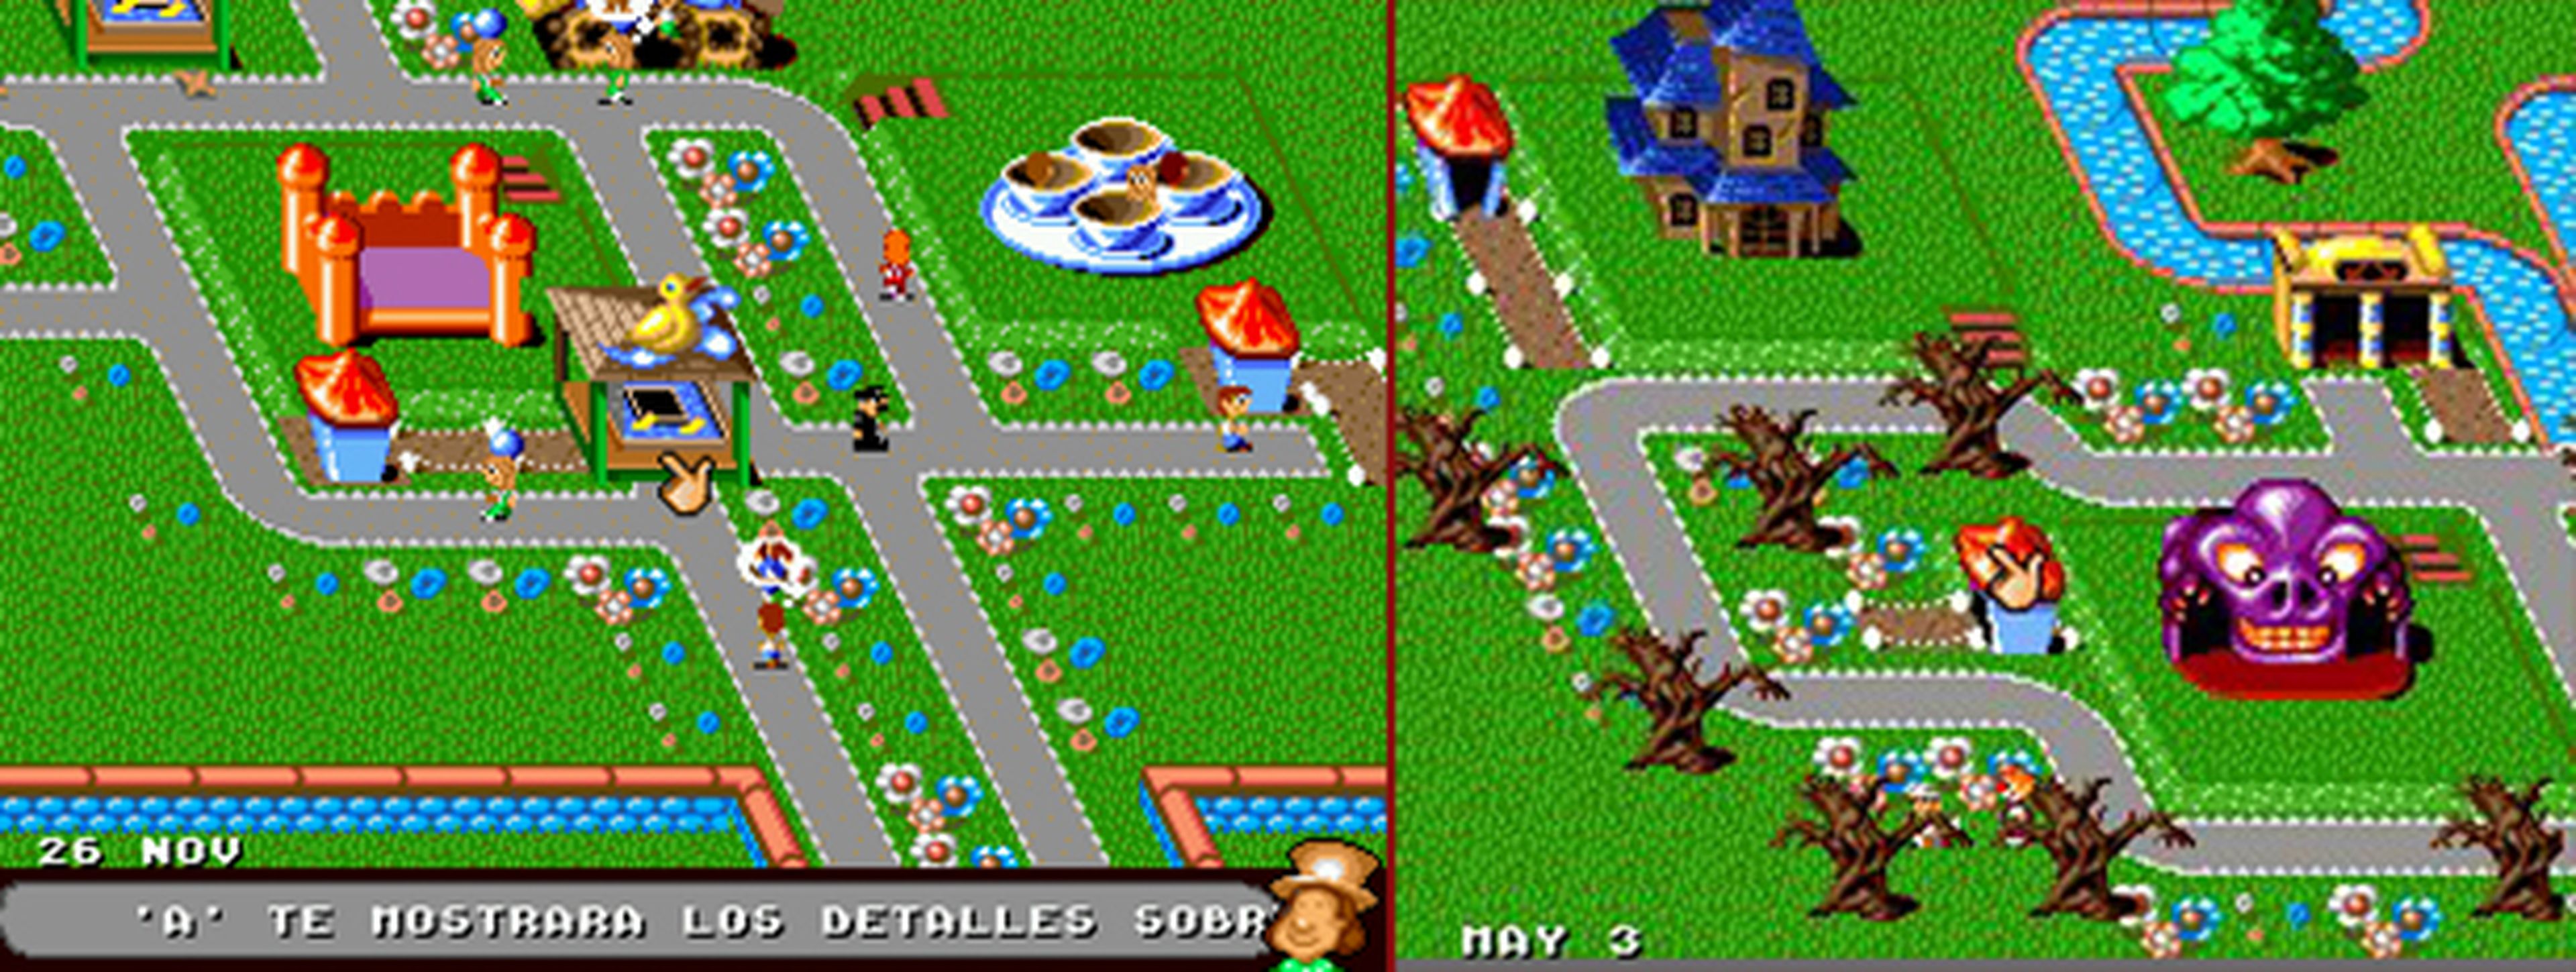 Hobby Consolas, hace 20 años: Theme Park